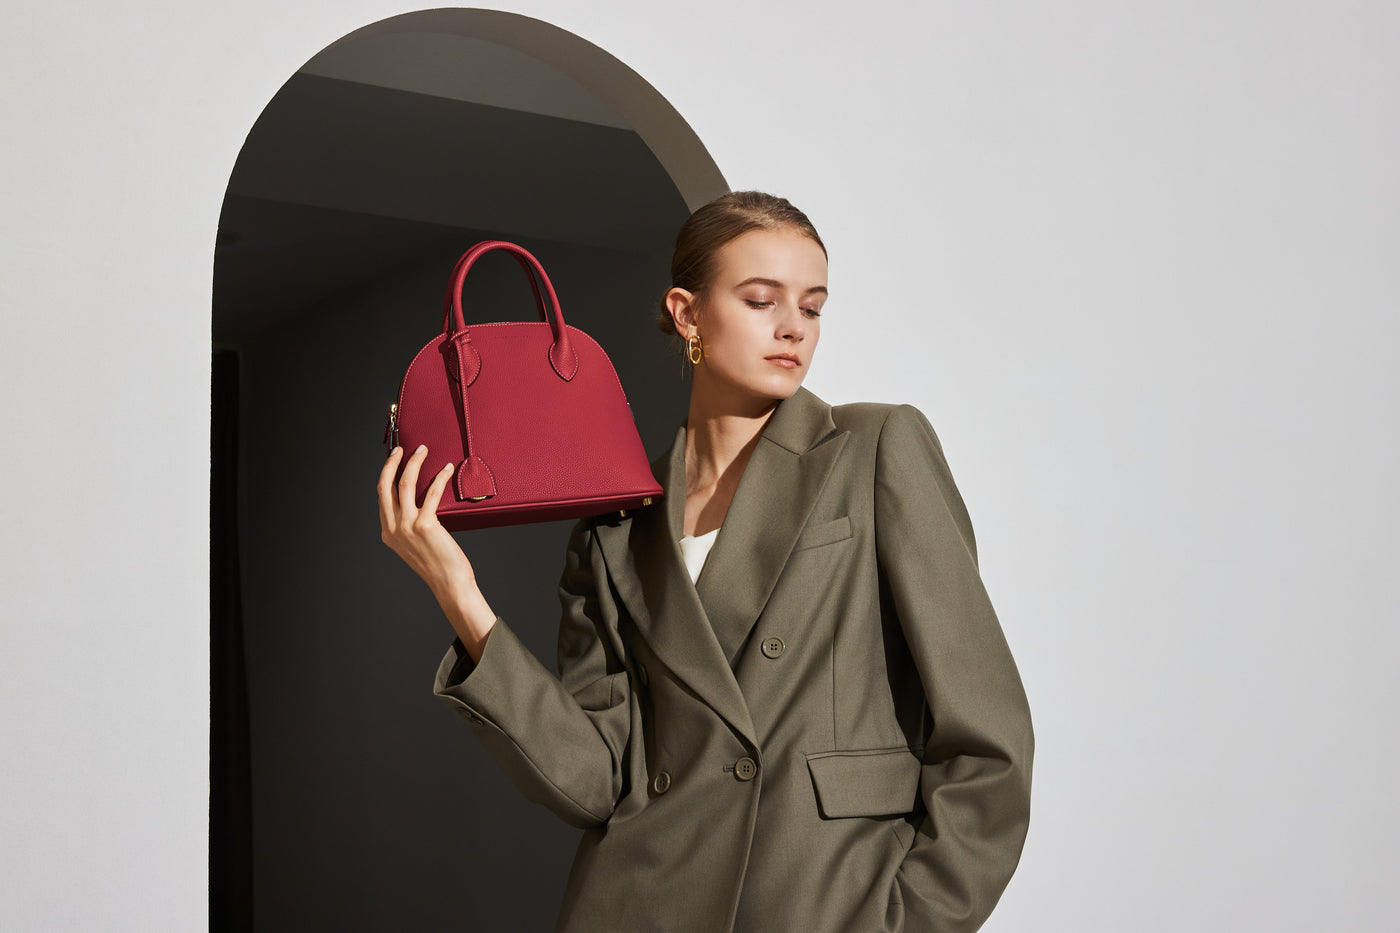 An elegant businesswoman carries a high-quality leather handbag from BONAVENTURA